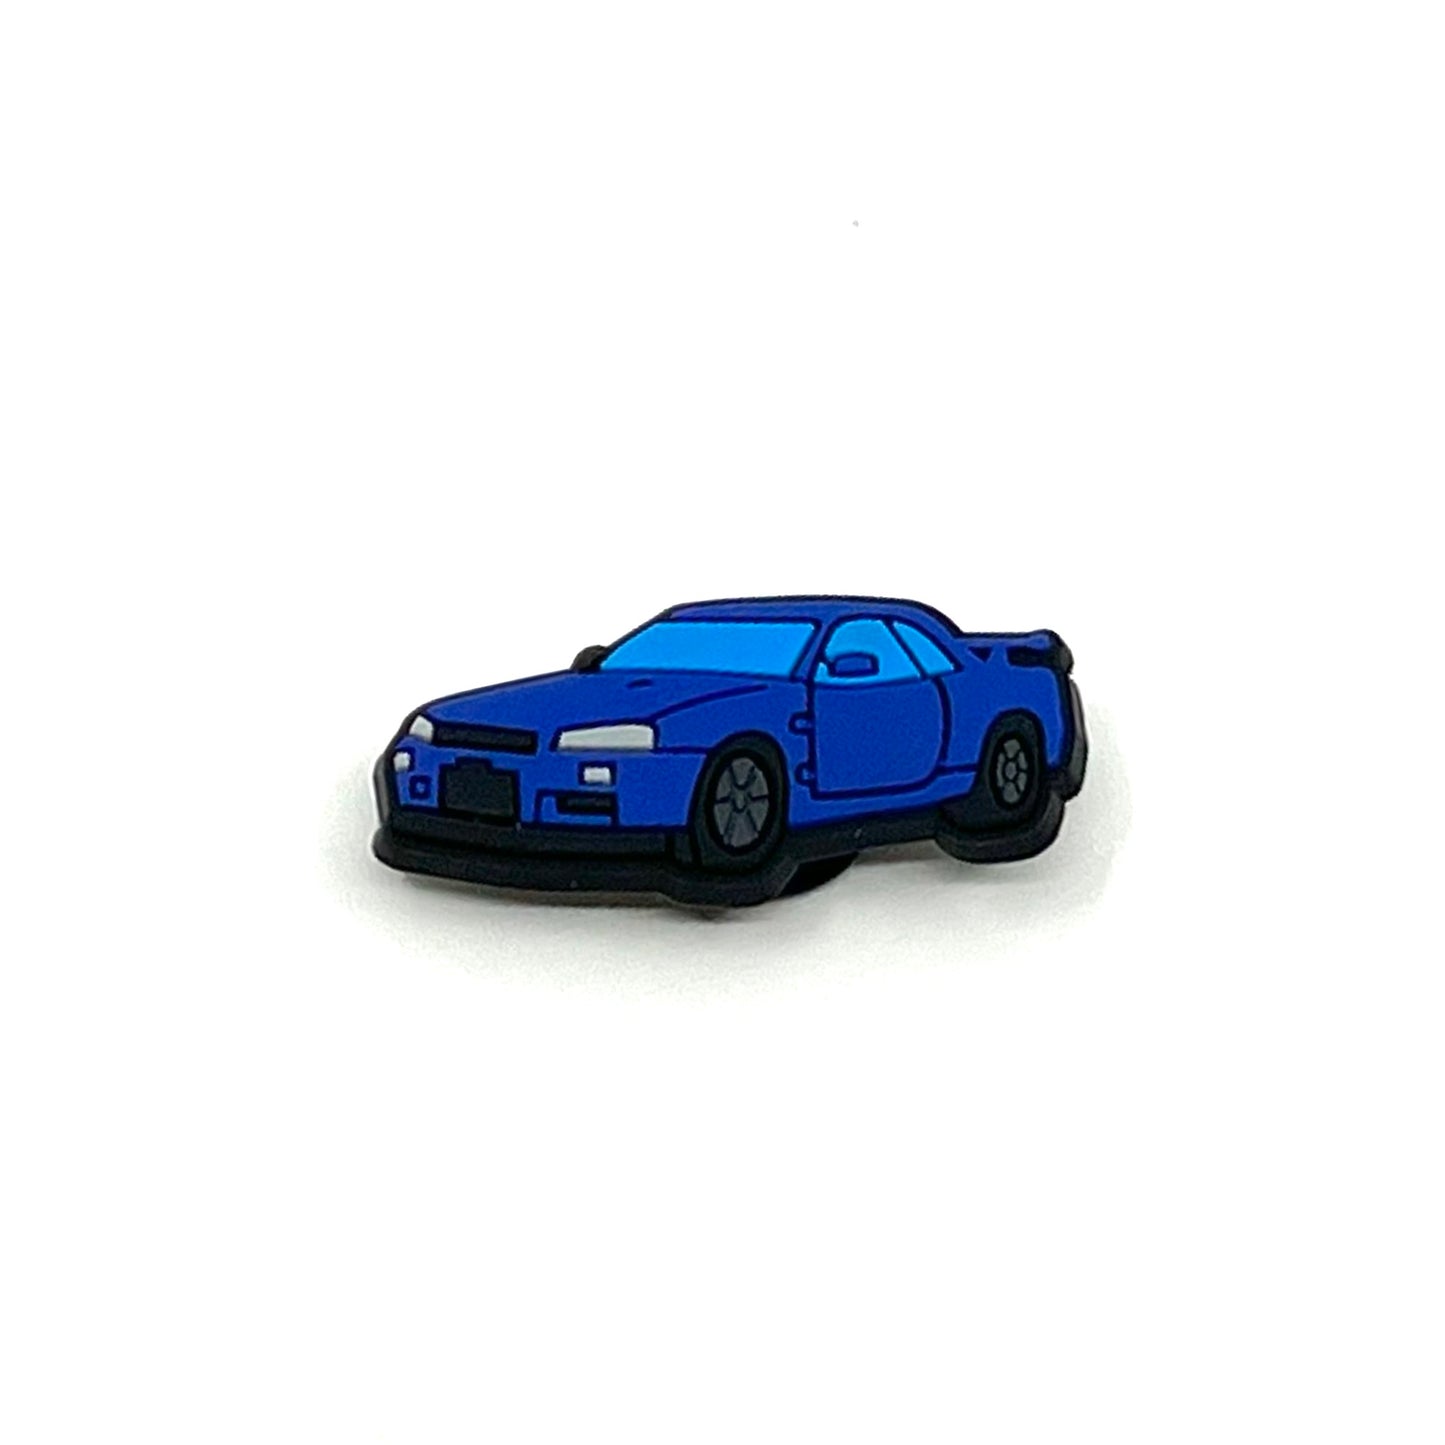 Blue Skyline r34 GTR